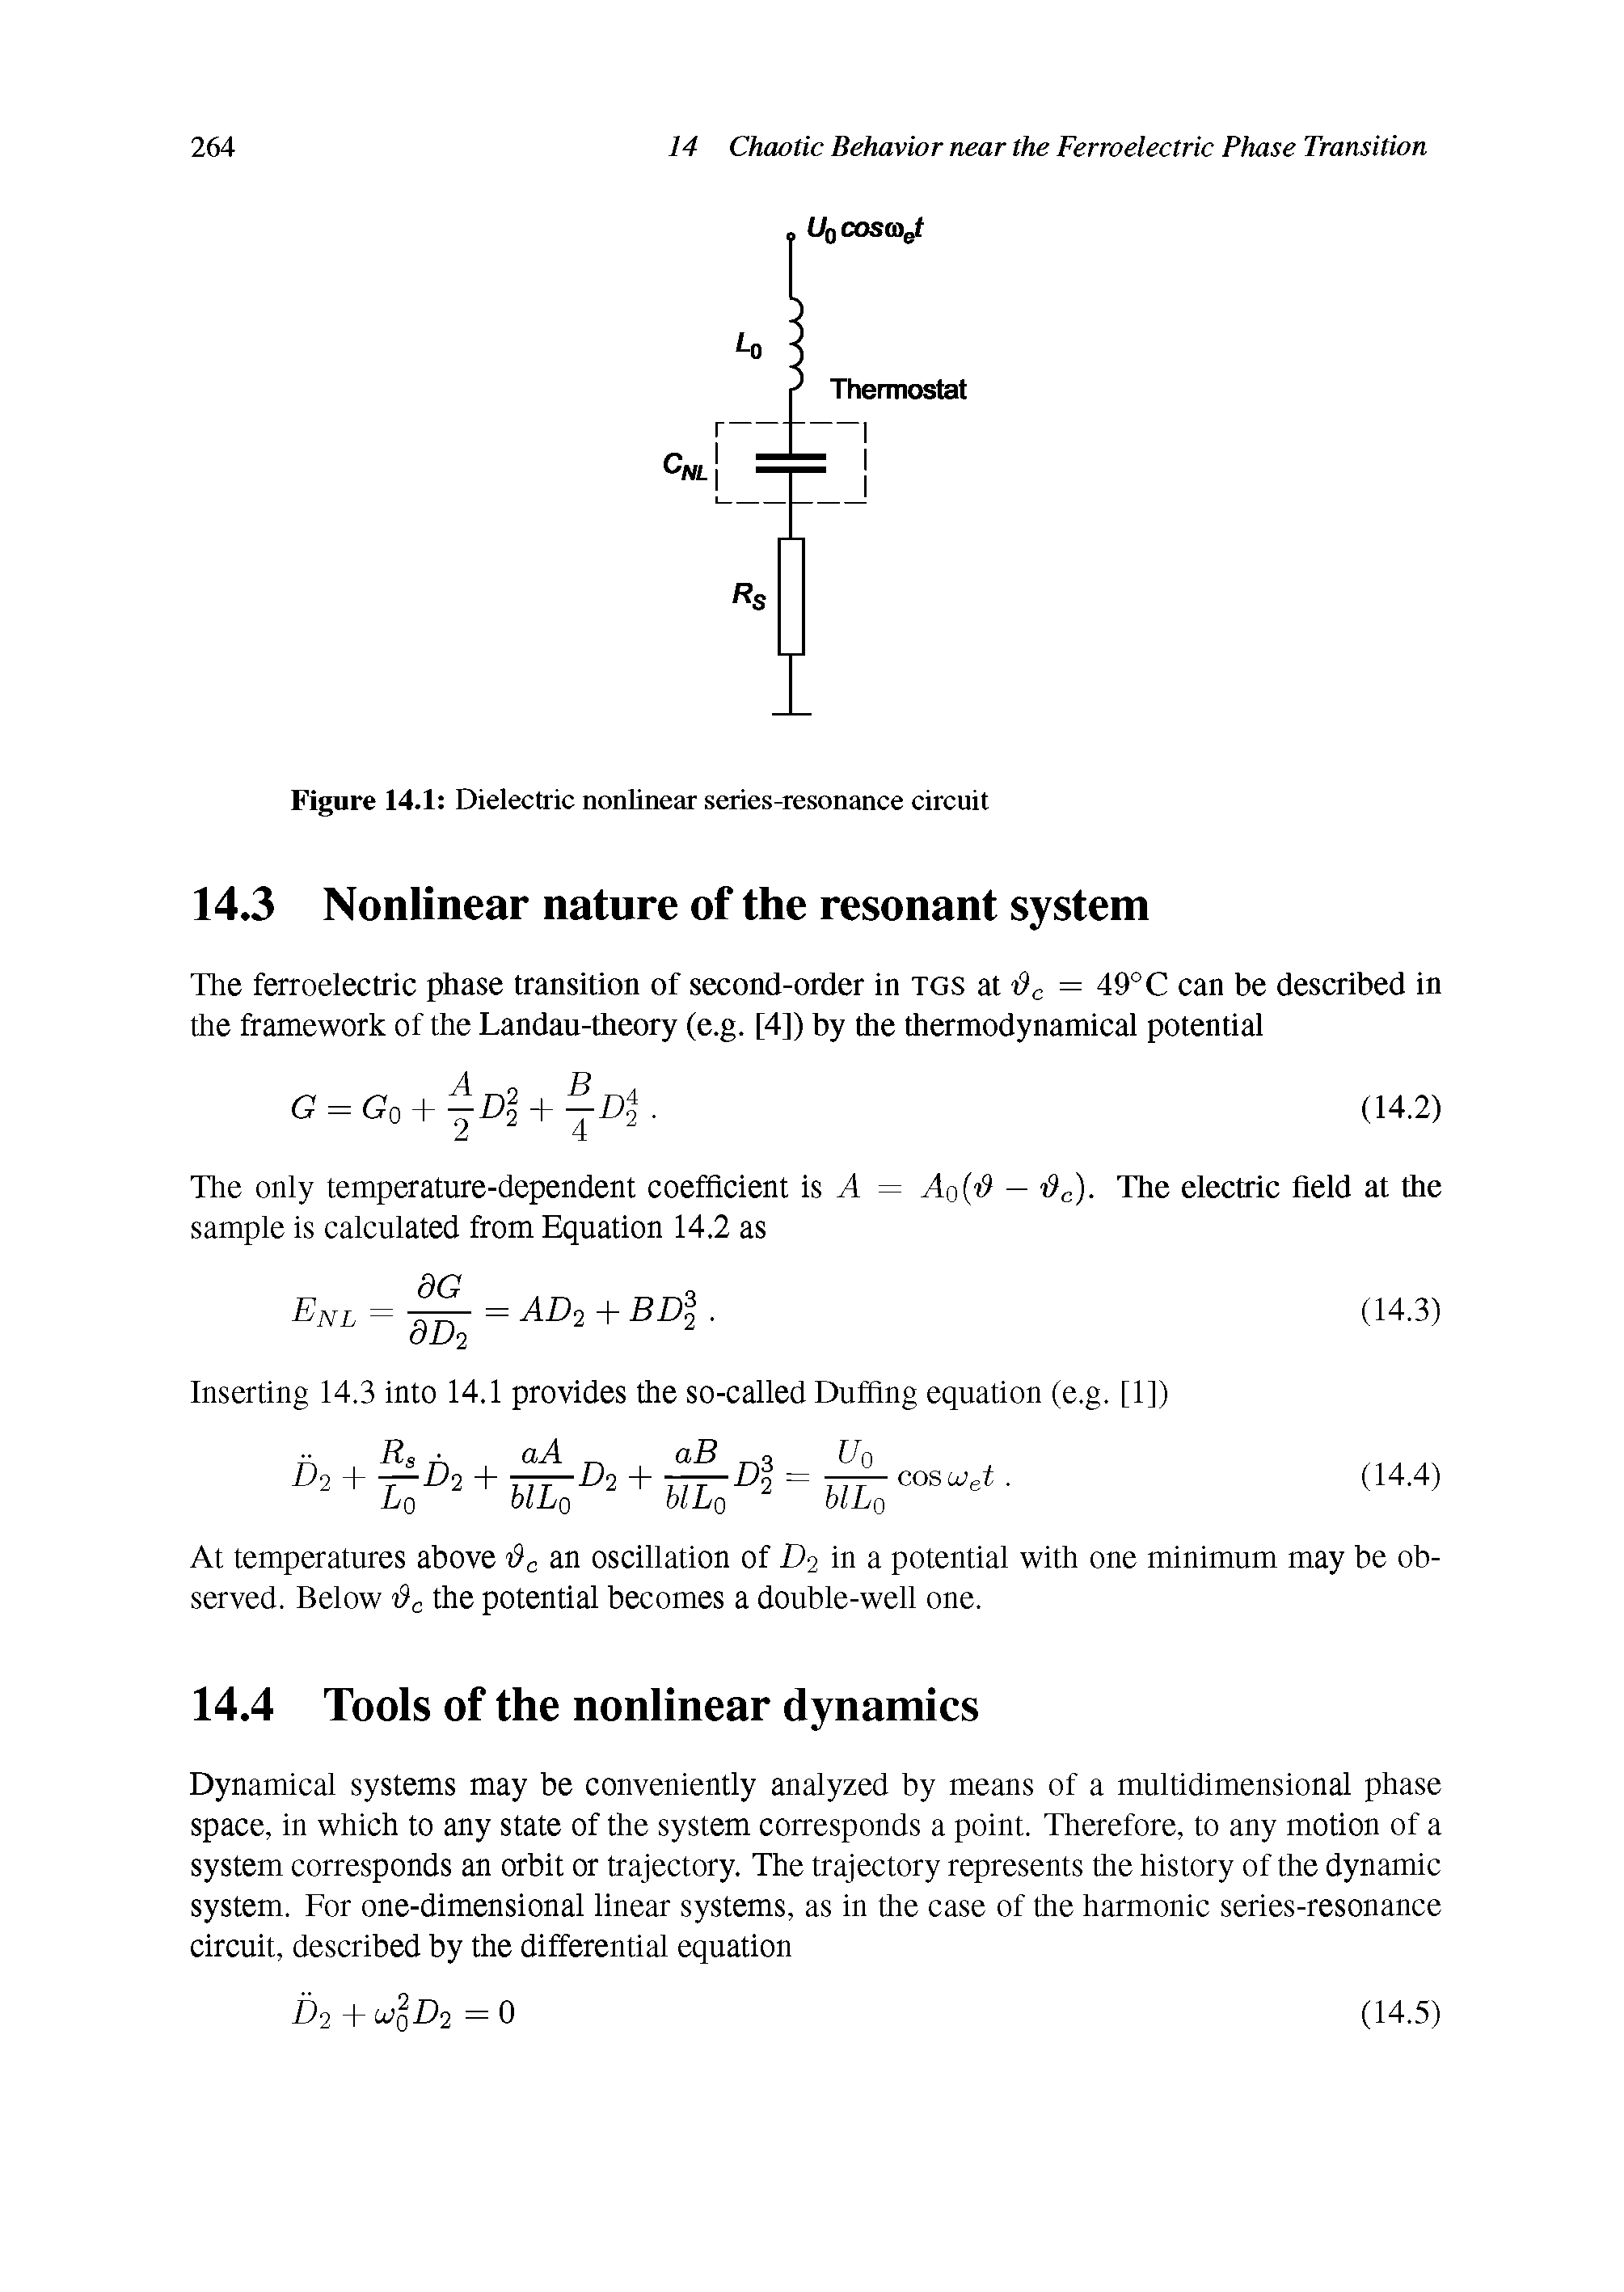 Figure 14.1 Dielectric nonlinear series-resonance circuit...